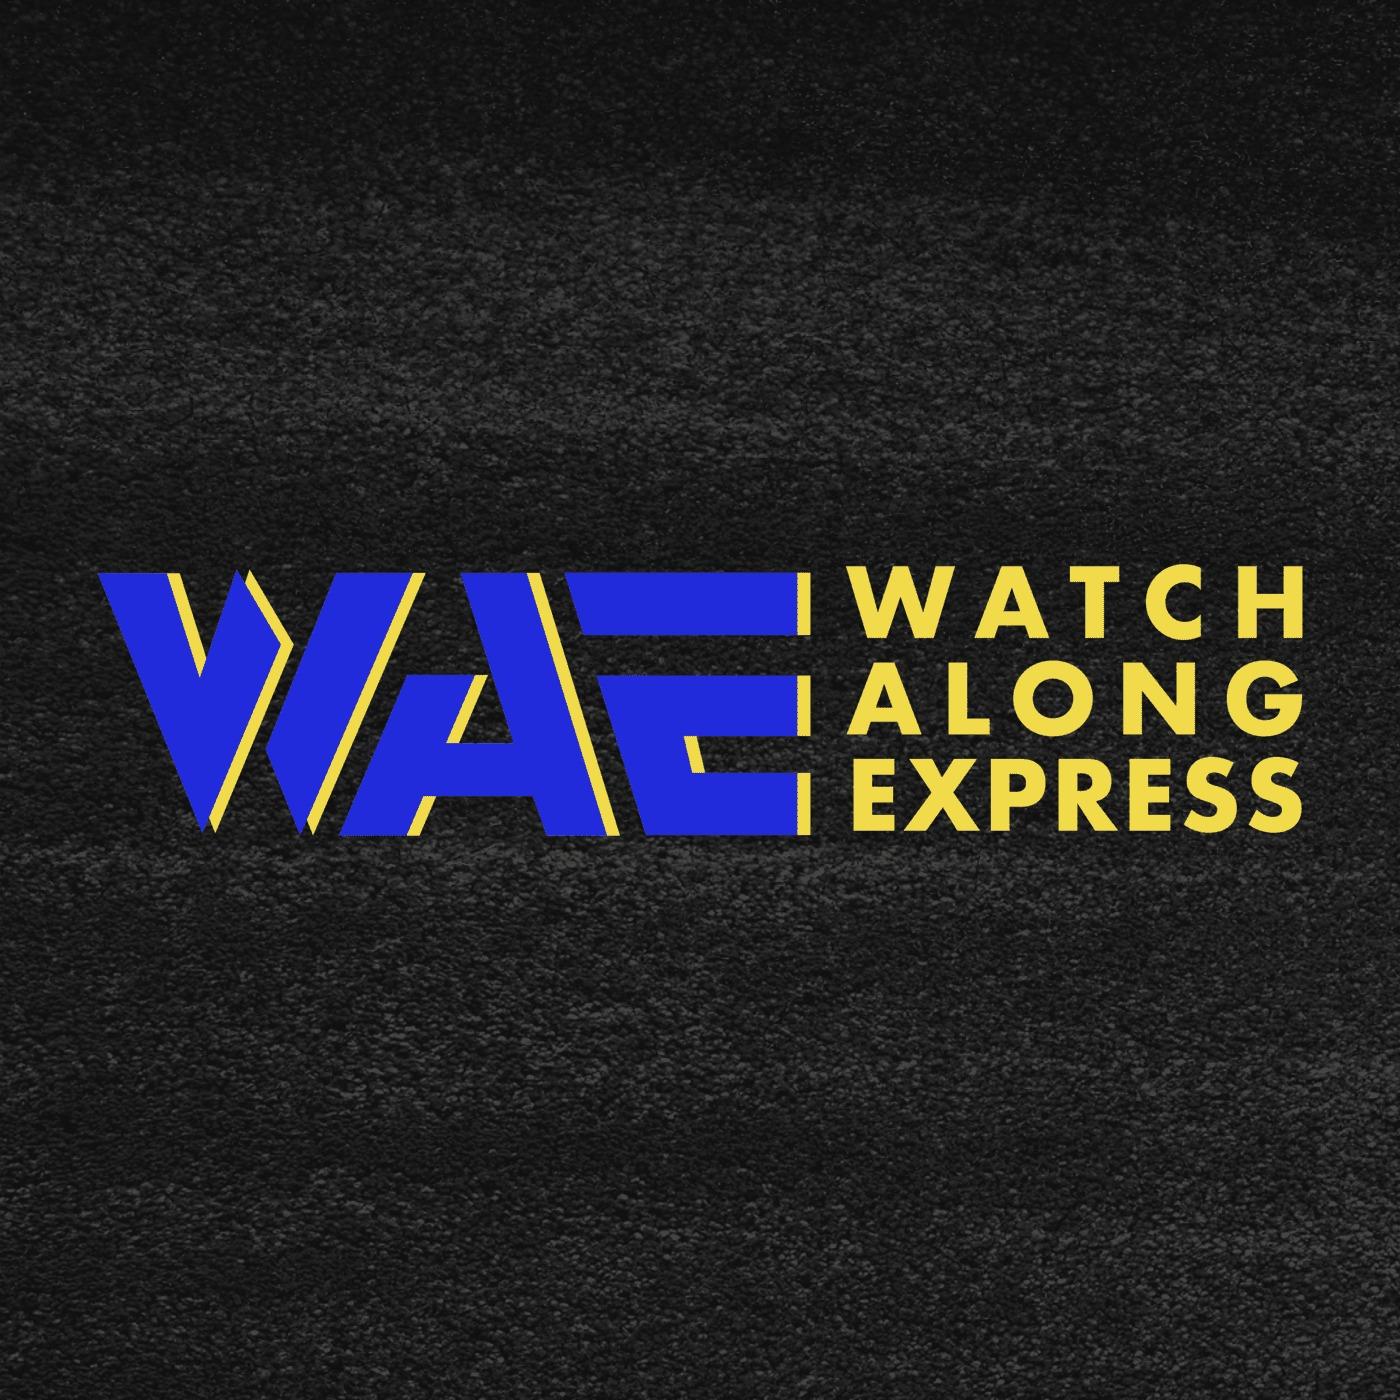 The Watchalong Express